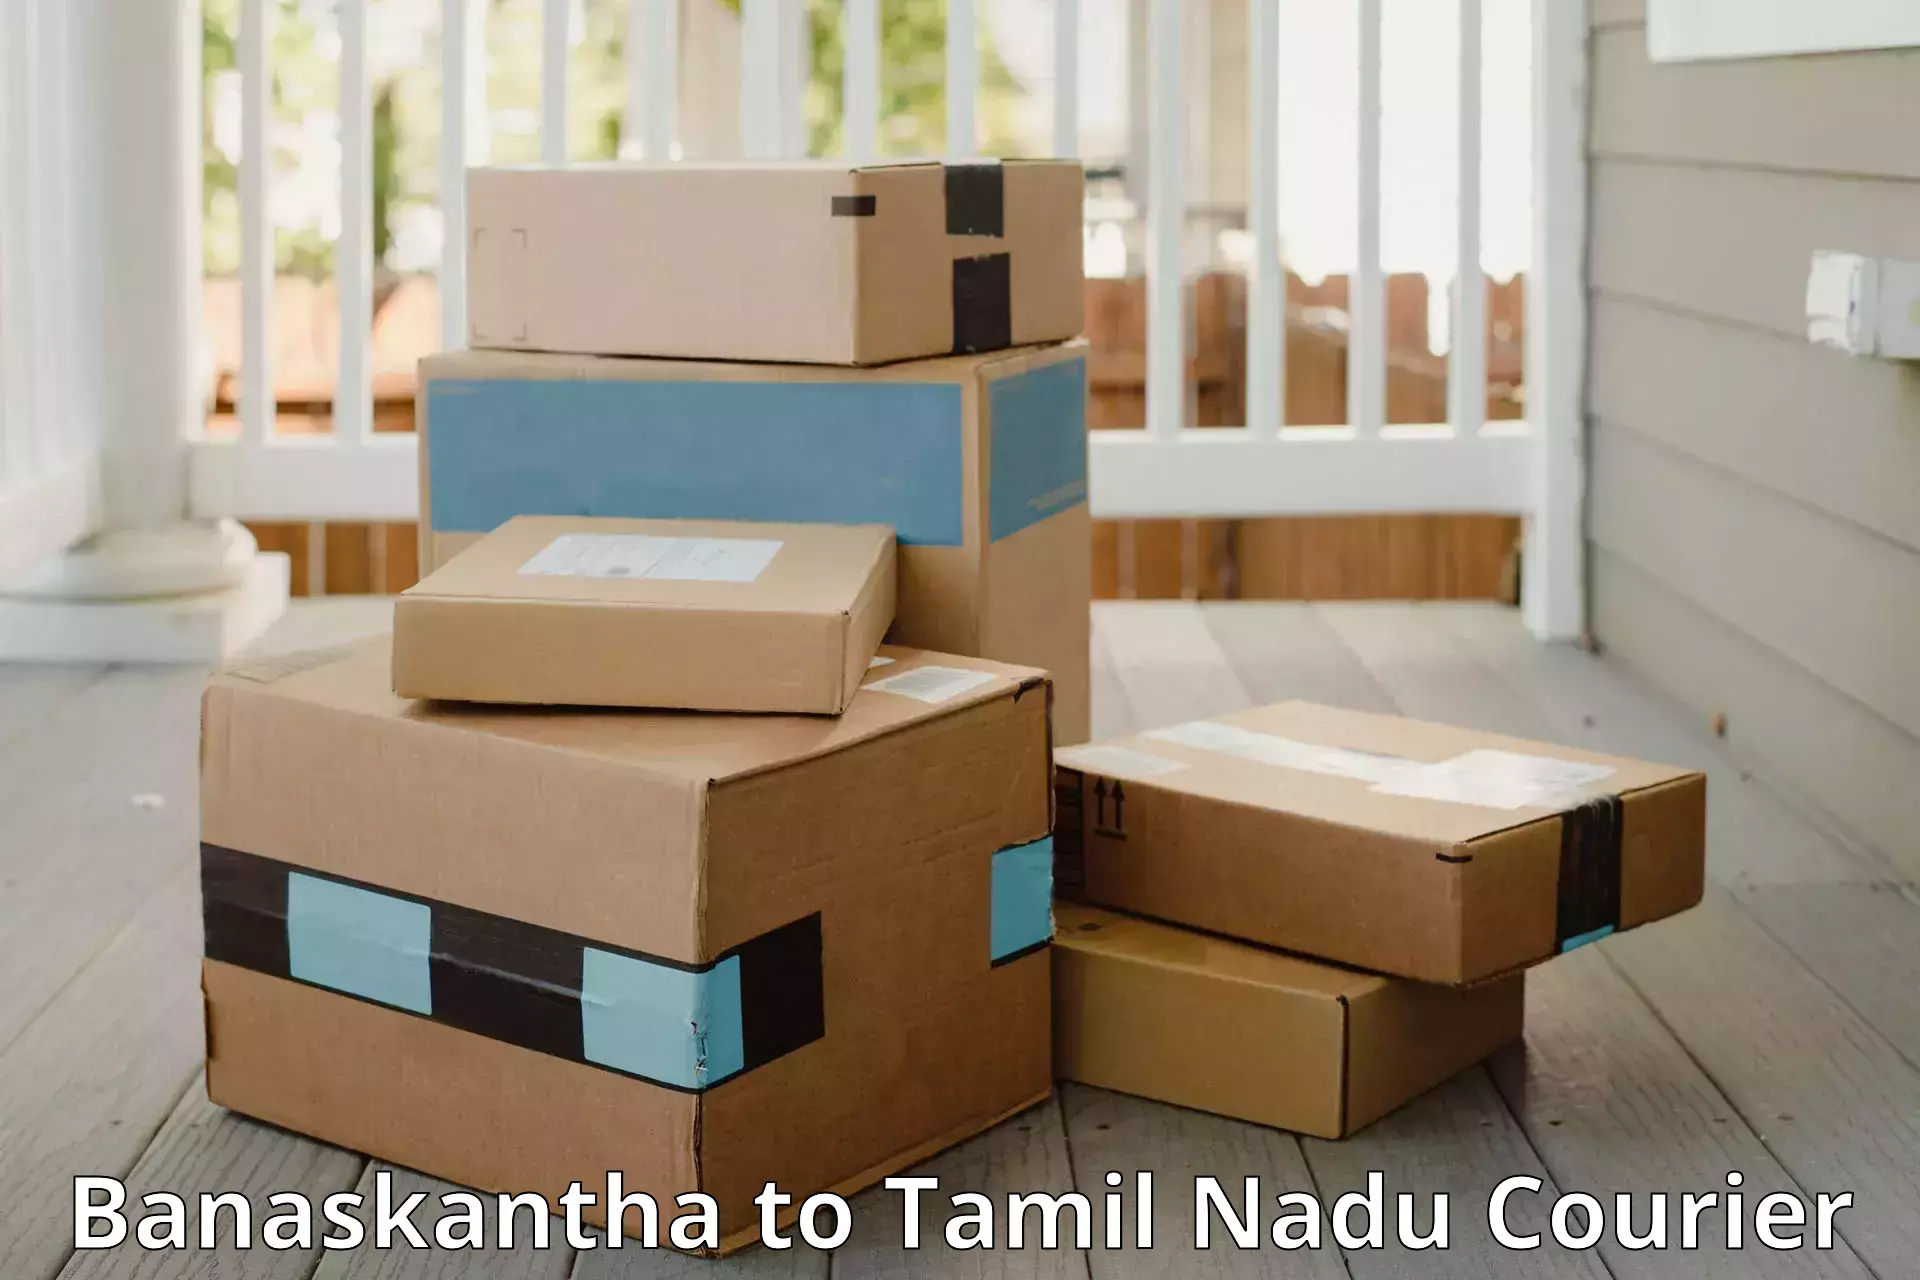 Luggage transport consultancy Banaskantha to Tamil Nadu